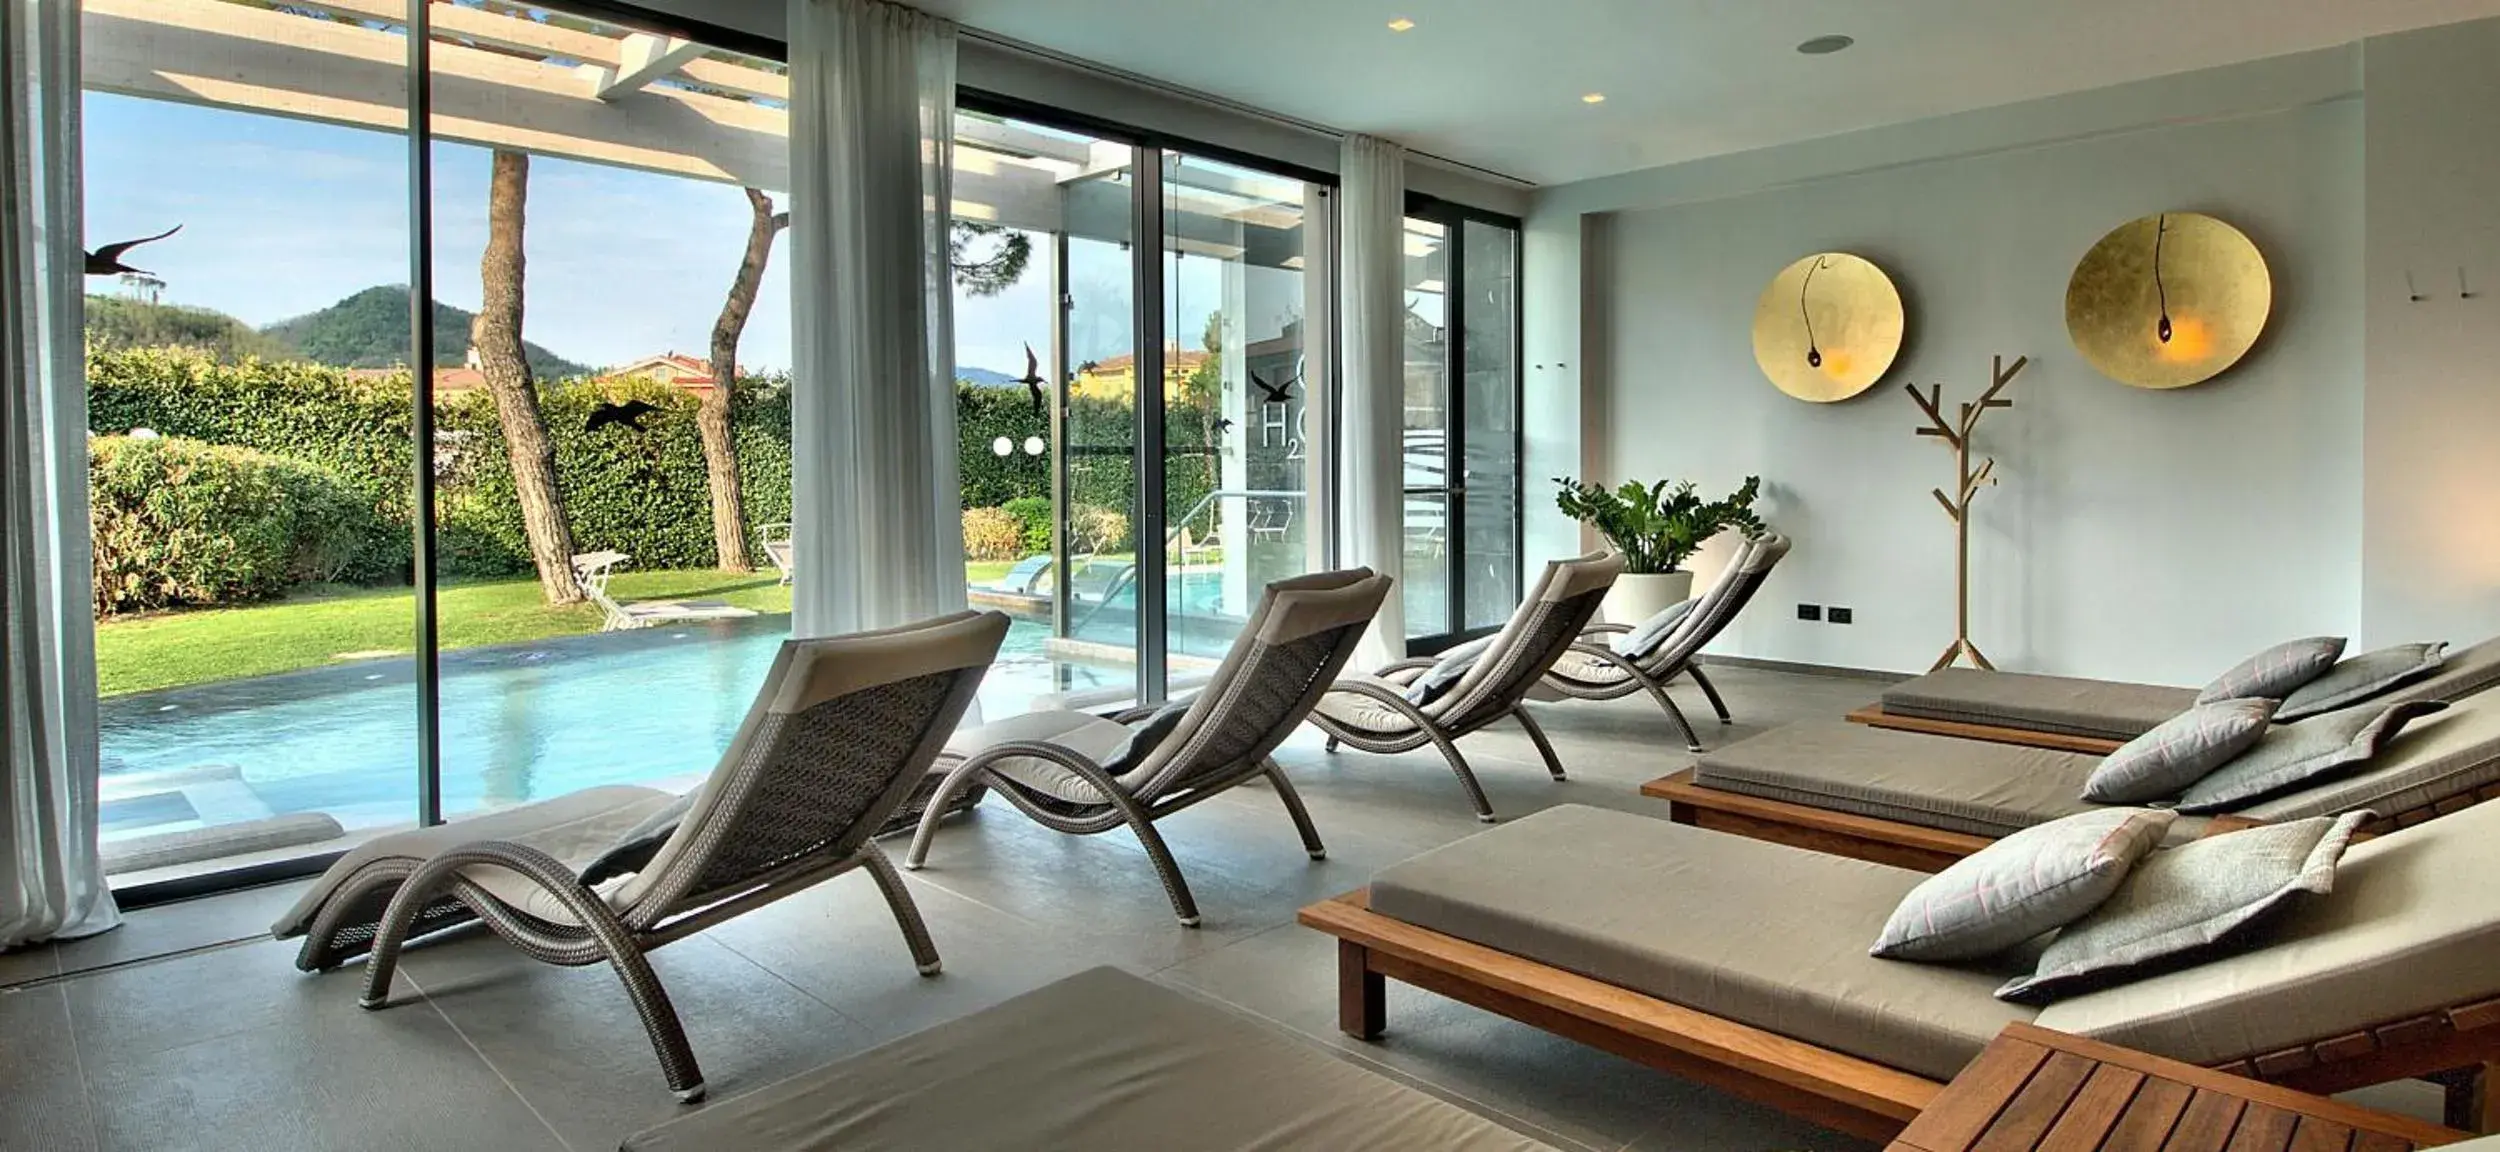 Swimming pool, Seating Area in Esplanade Tergesteo - Luxury Retreat